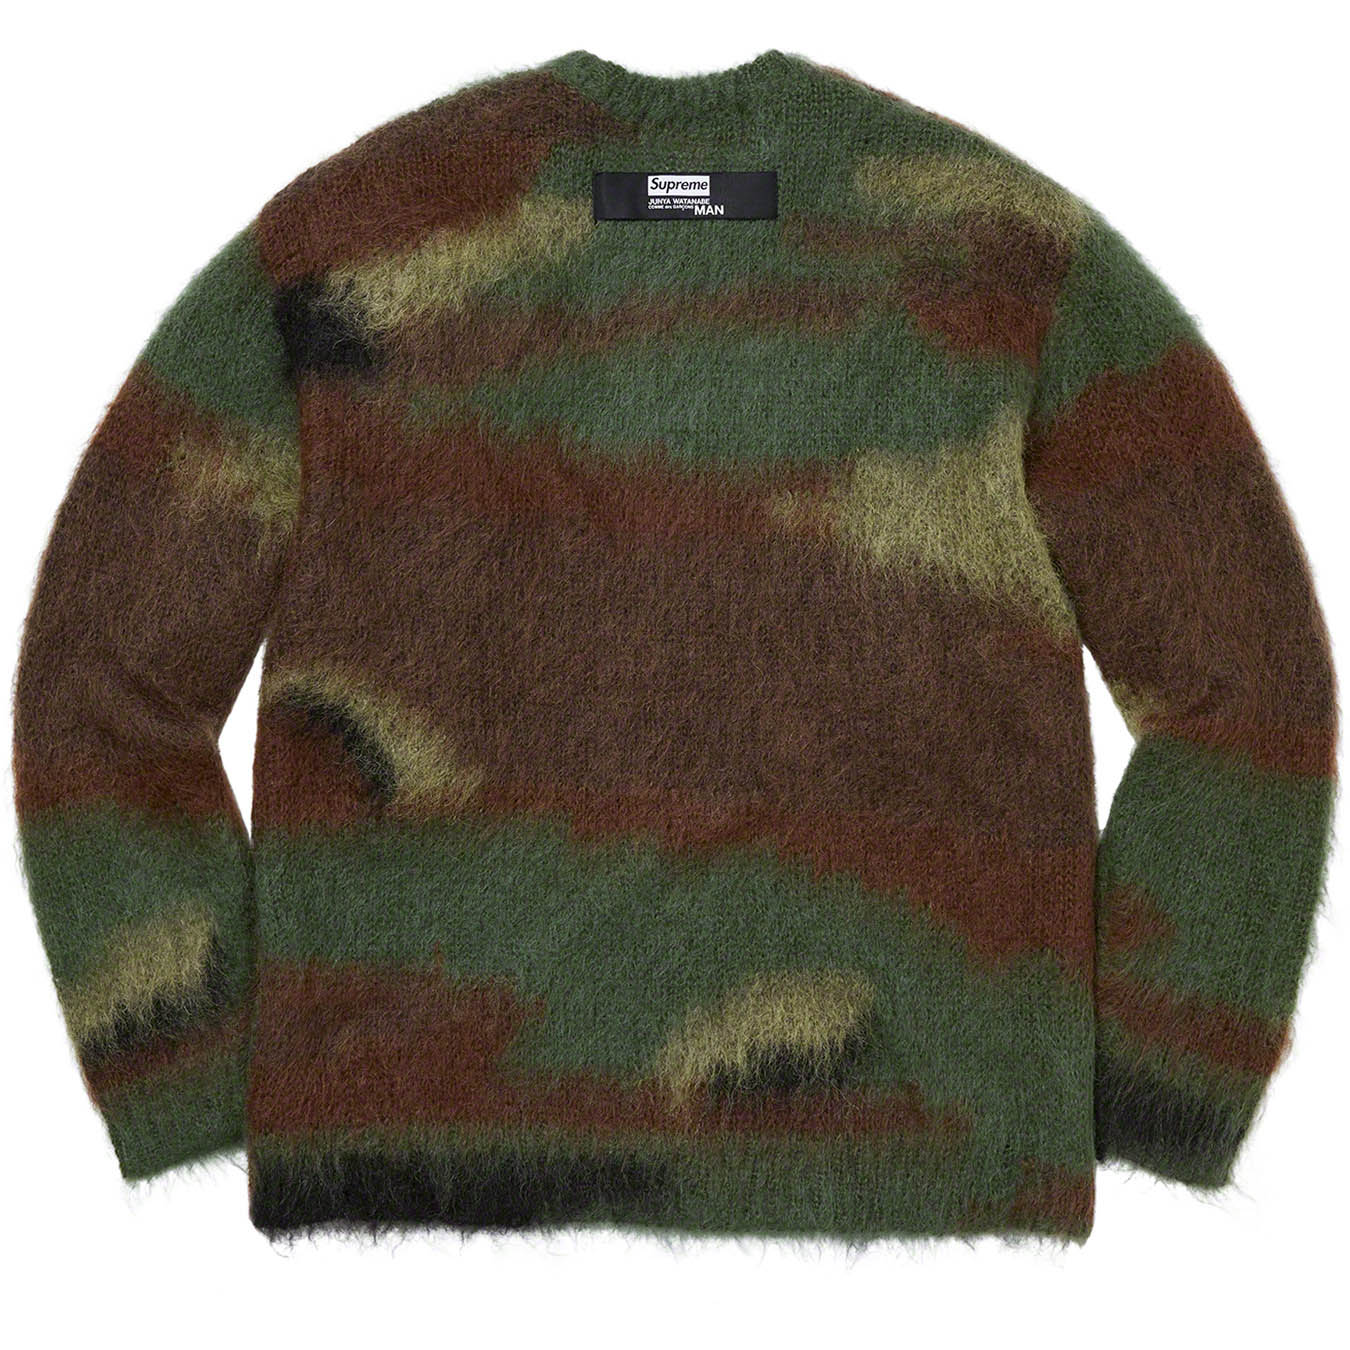 Supreme®/JUNYA WATANABE COMME des GARÇONS MAN Brushed Camo Sweater